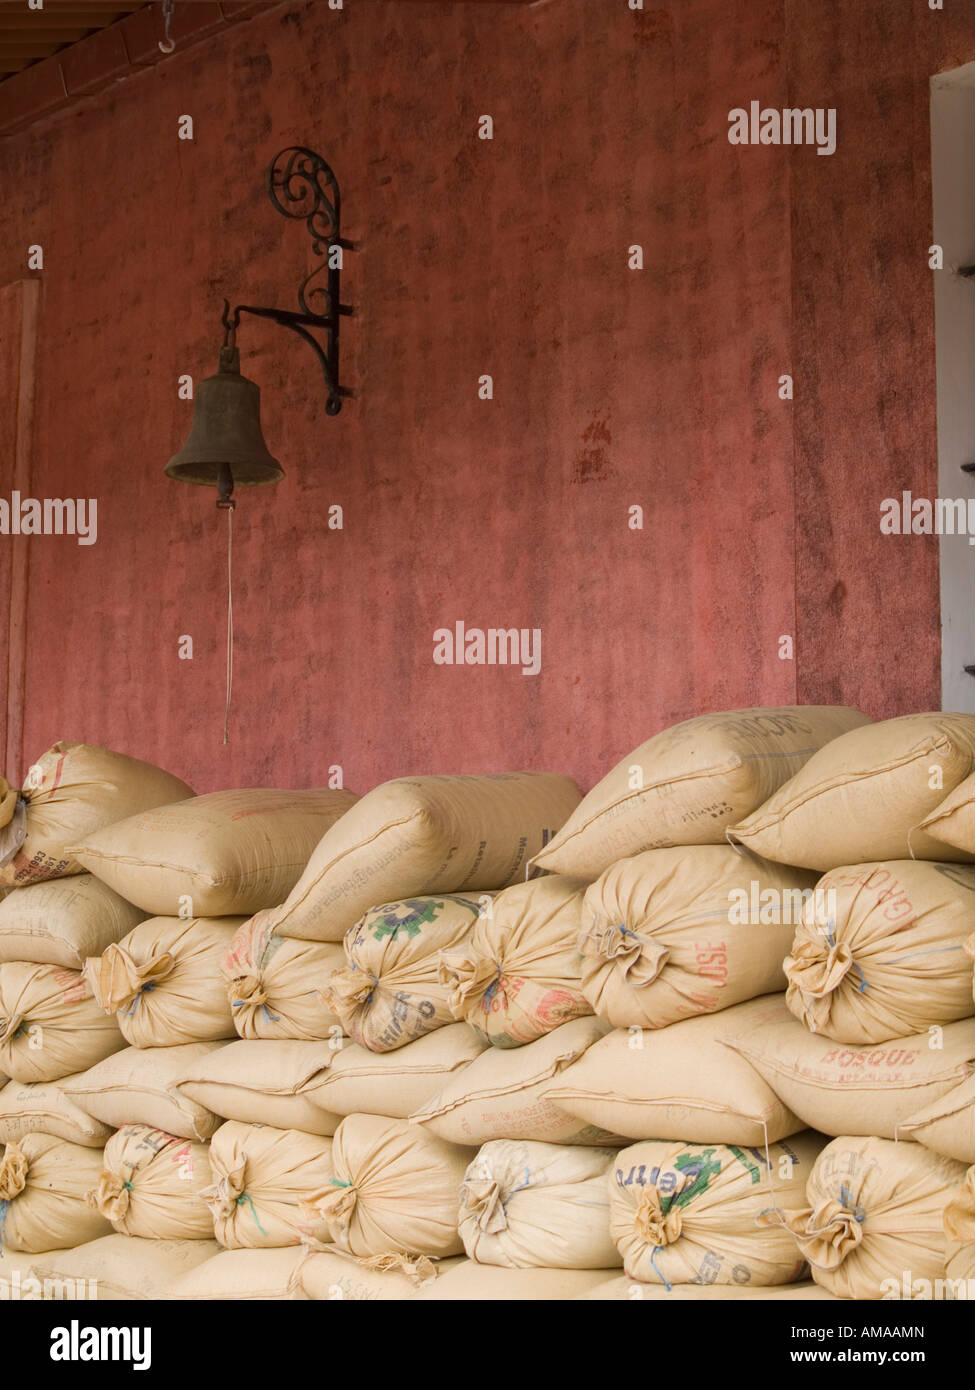 Antigua, Guatemala: Processed coffee beans in storage. Stock Photo